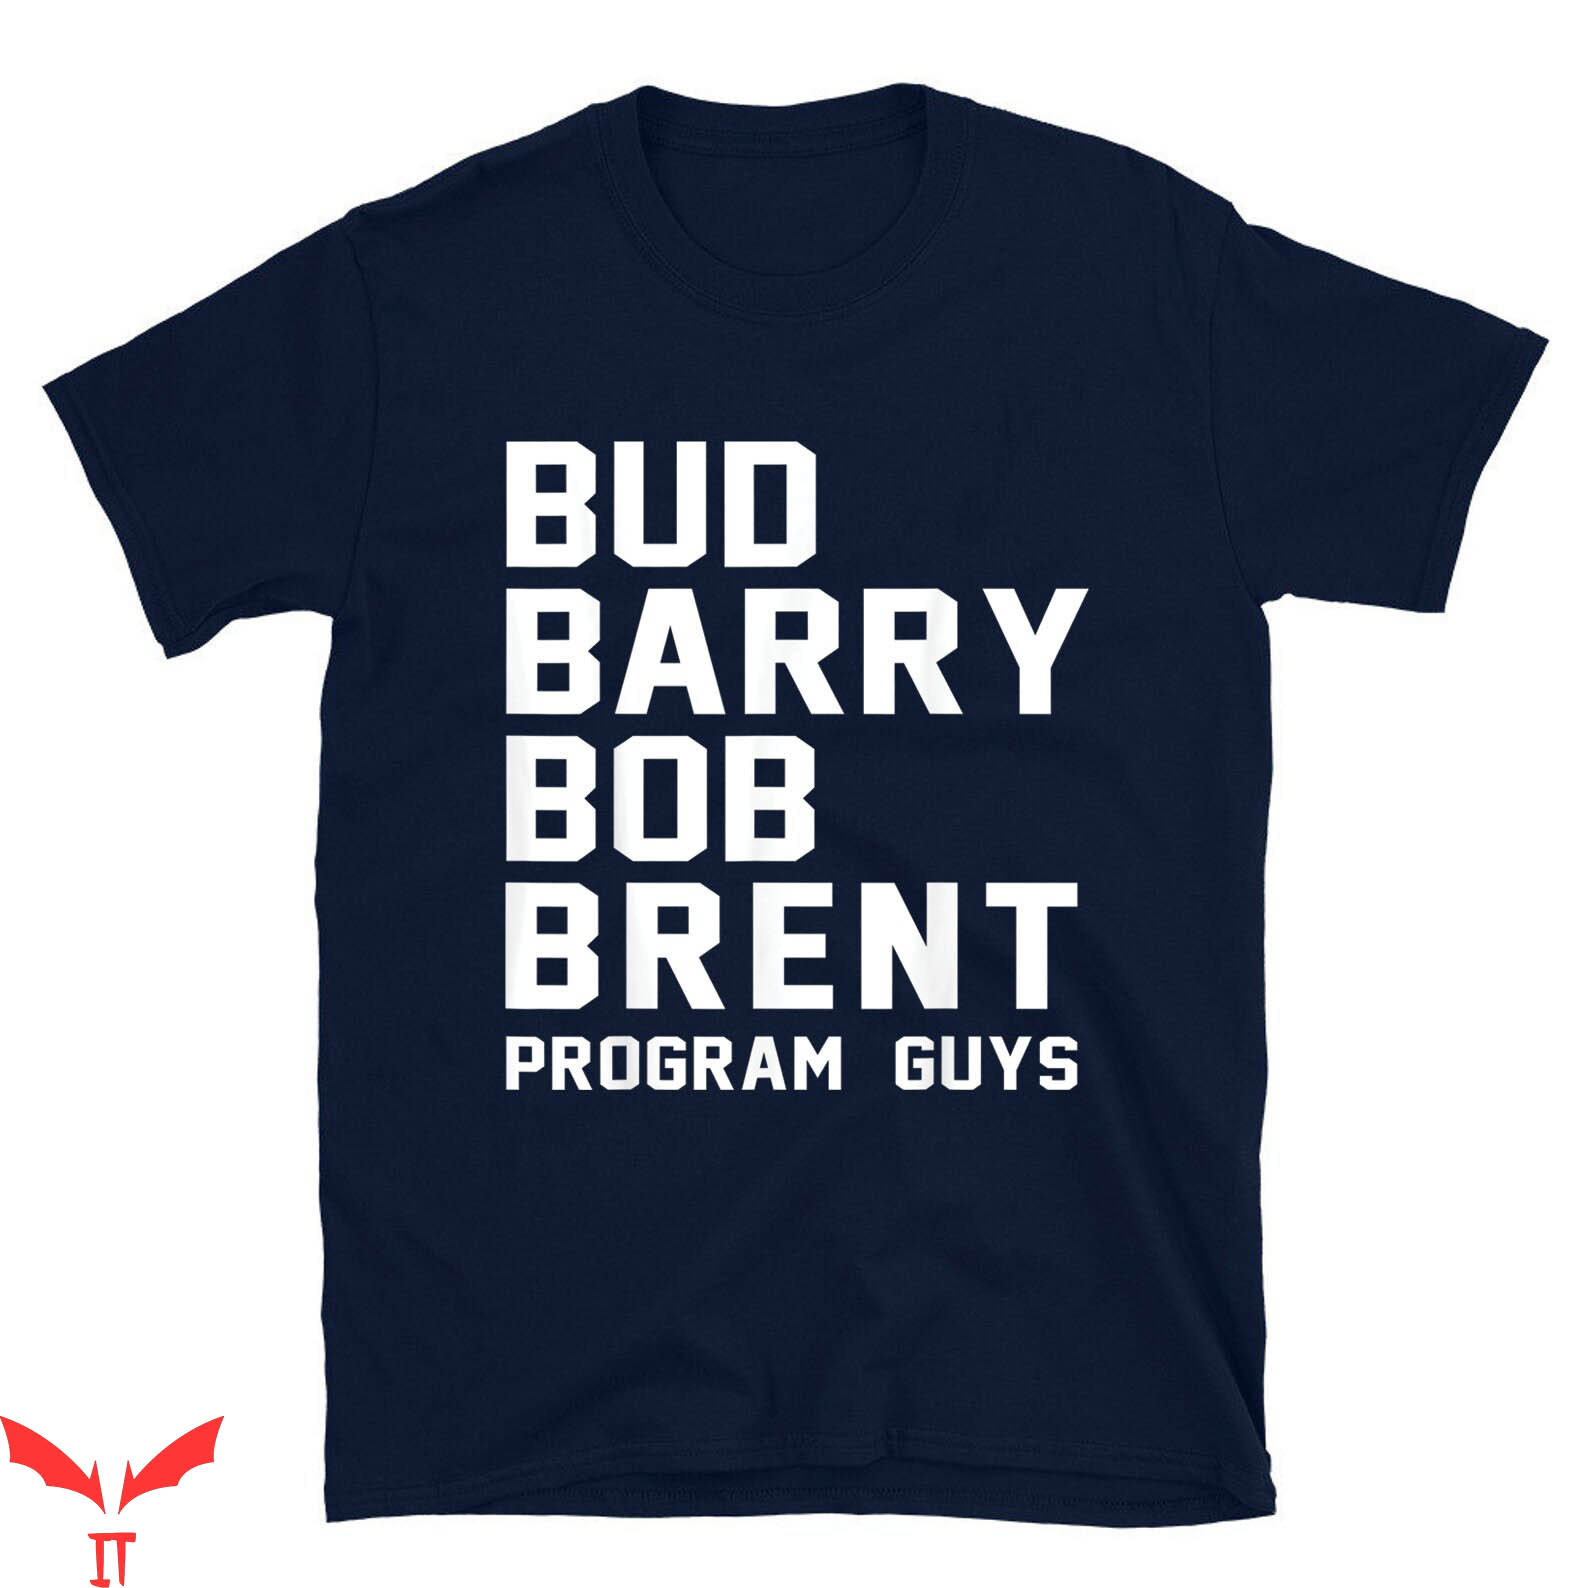 Bud Barry Bob Brent T-Shirt Cool Design Humorous Novelty